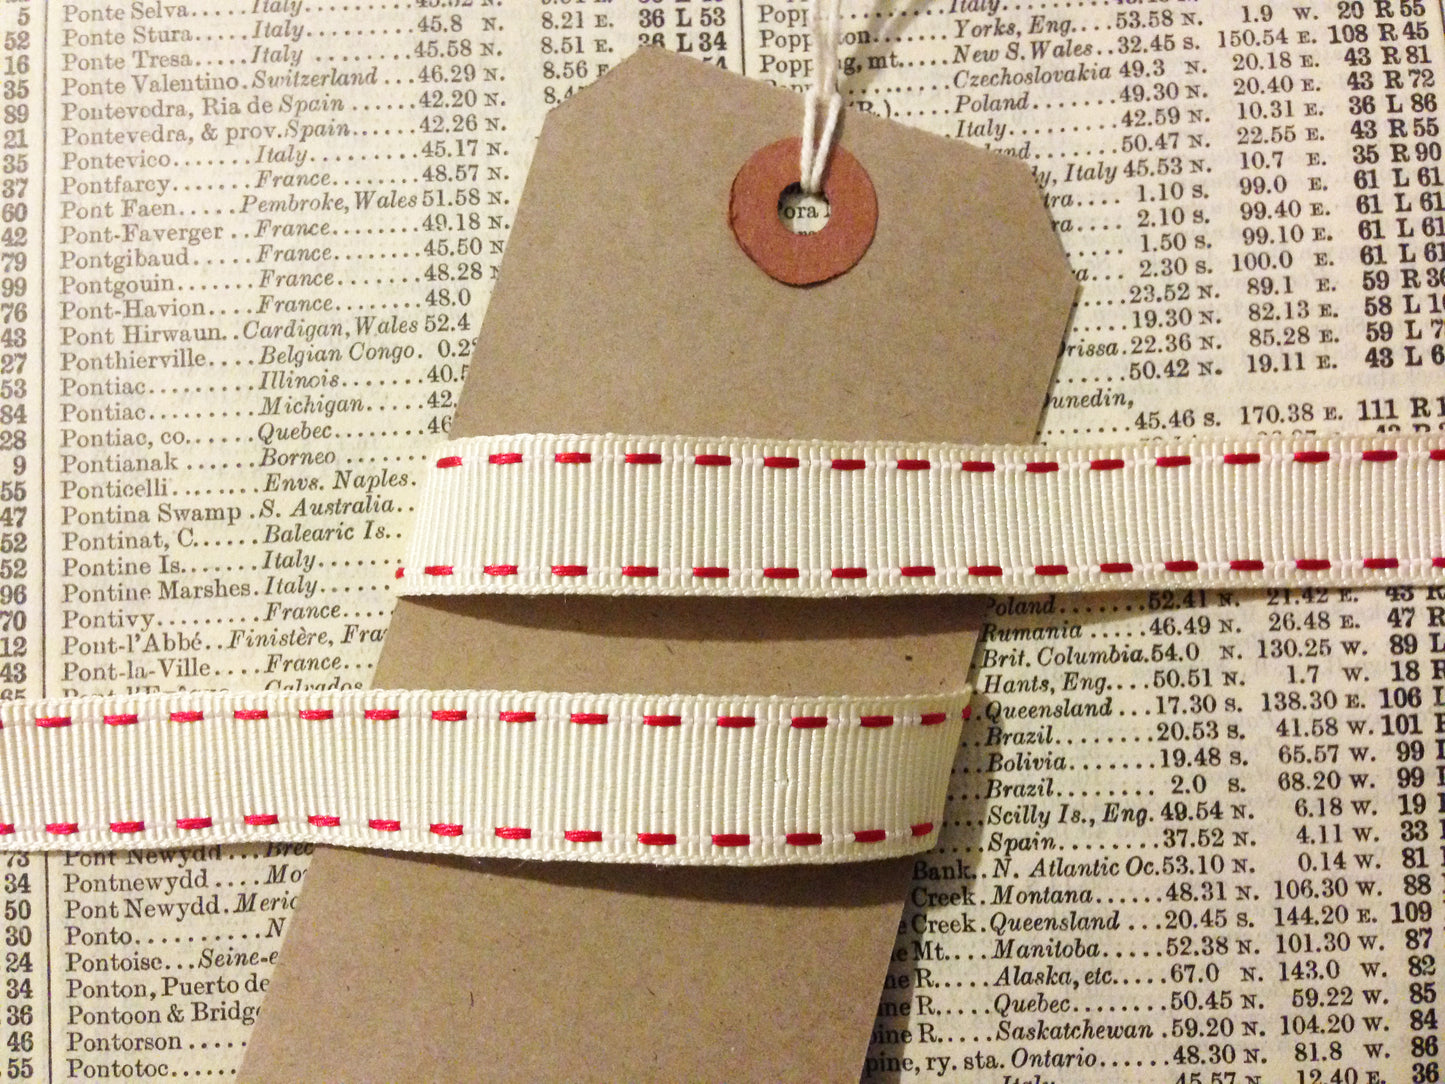 Red & Cream Love Ribbon | Gift Wrap | Hearts Love Stitch | 15mm Grosgrain Craft - SweetpeaStore